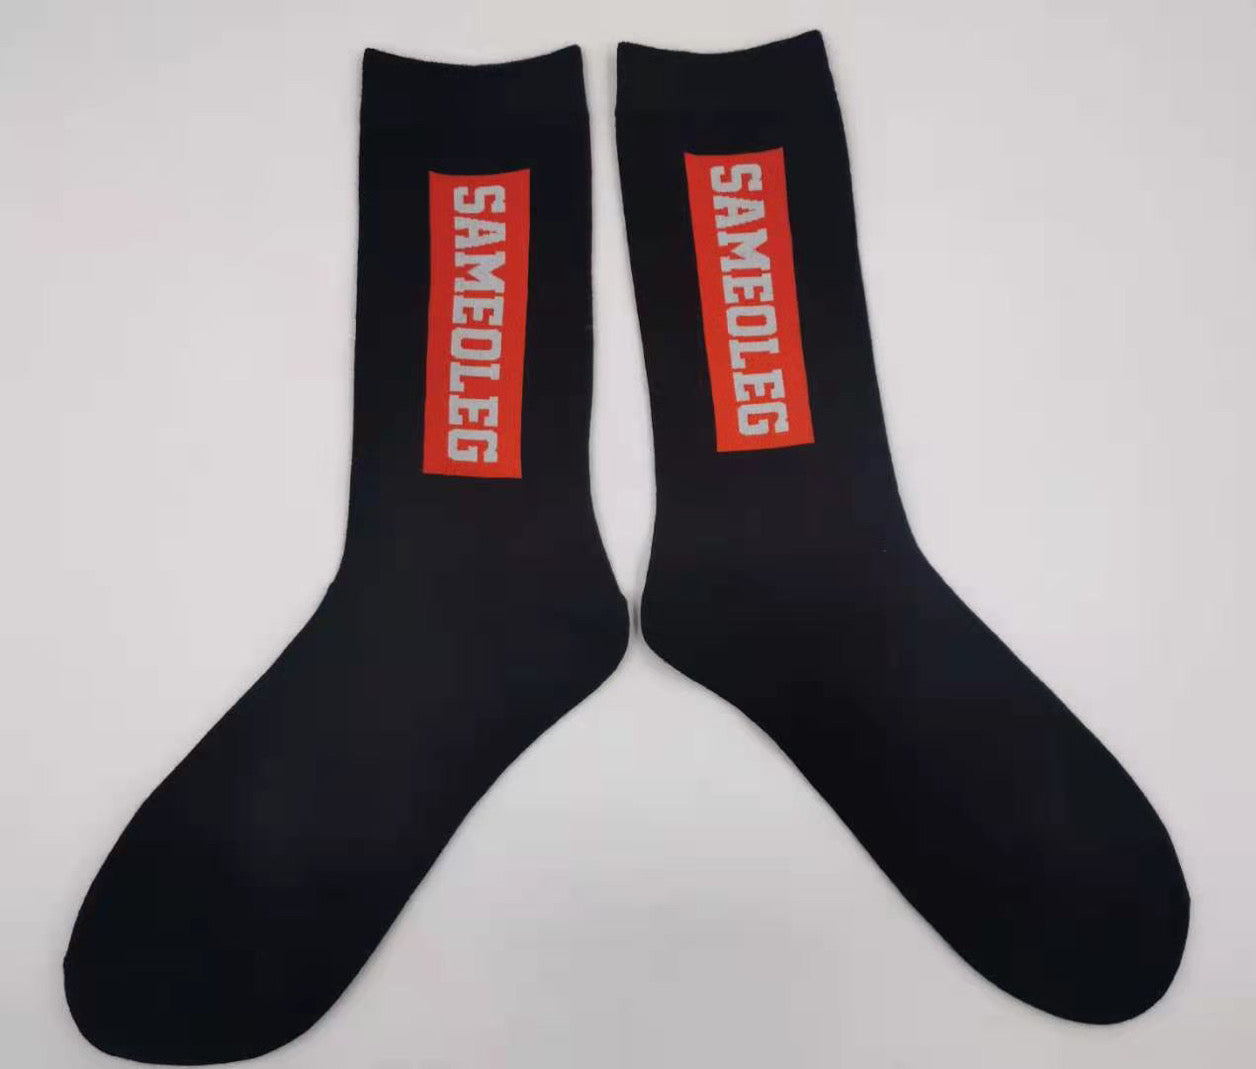 SameOleG Sock Collection